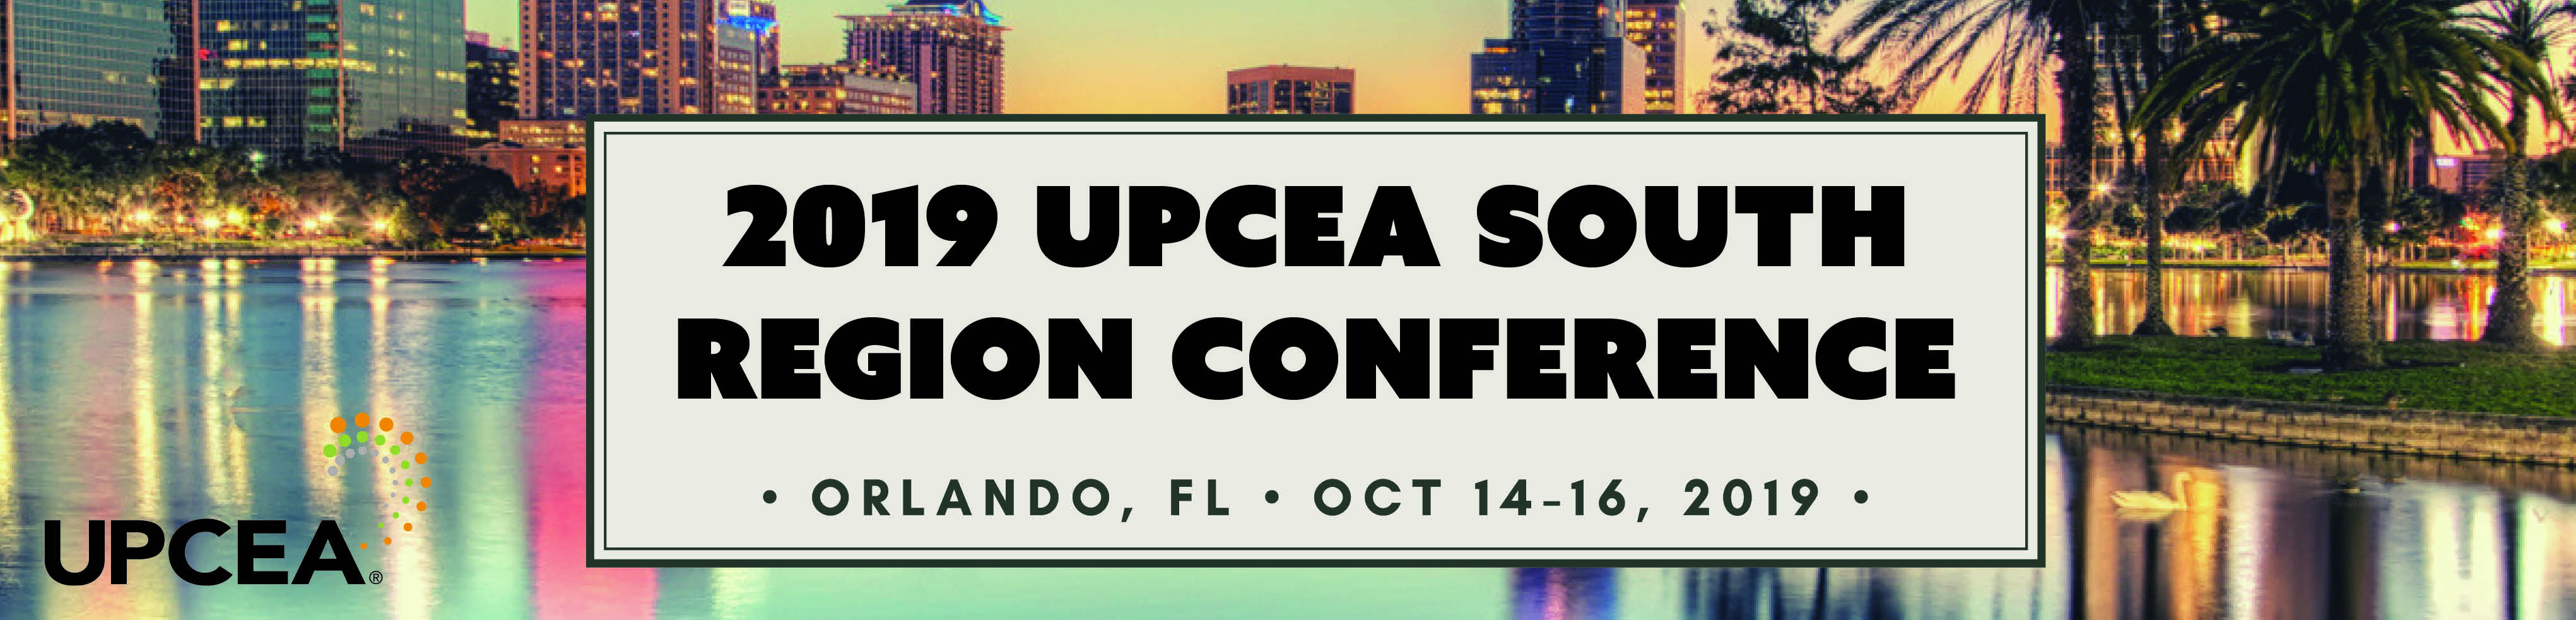 UPCEA 2019 South Region Conference Orlando, FL October 1416, 2019